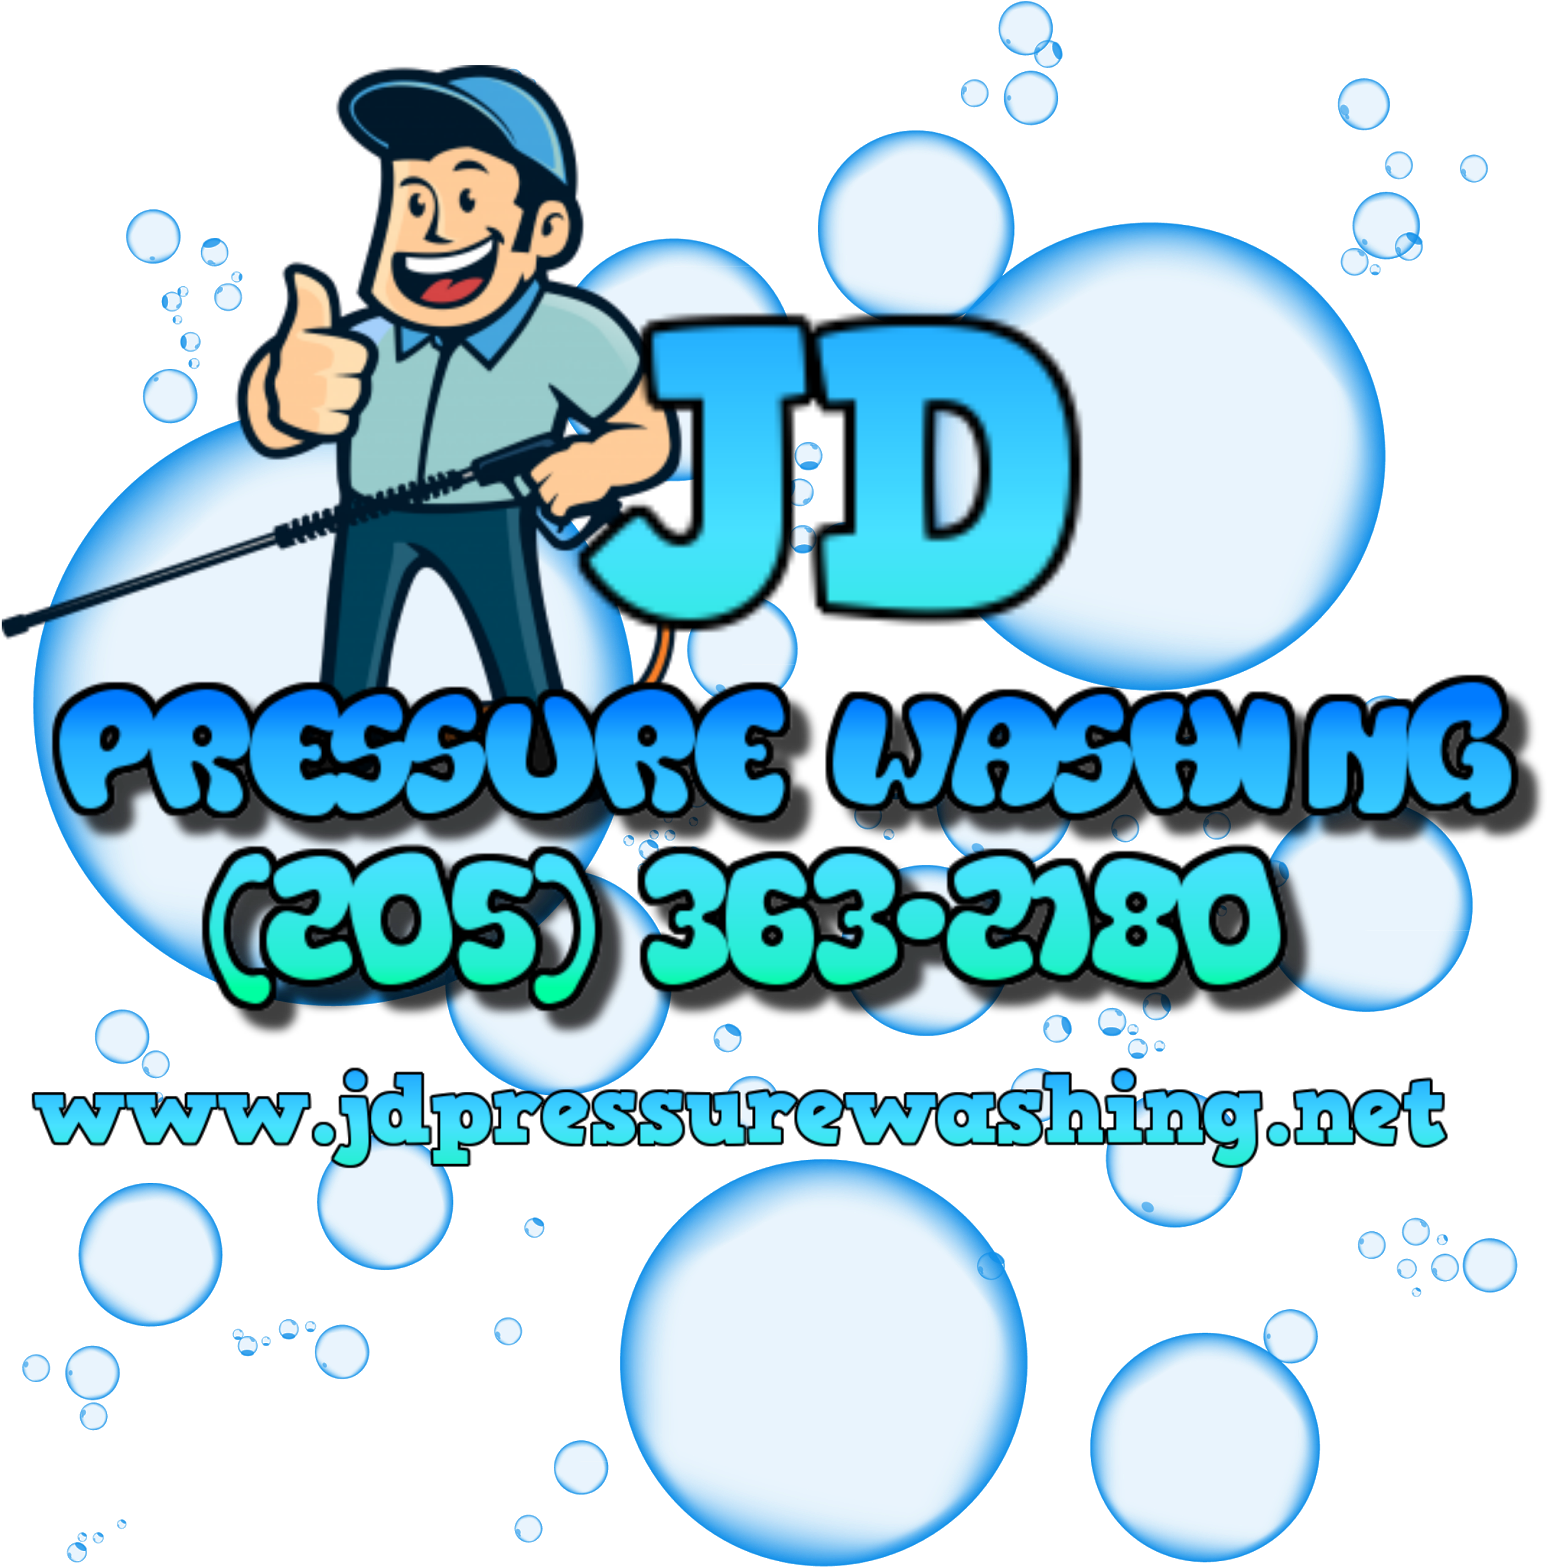 Jd Pressure Washing - Jd Pressure Washing (1600x1600)